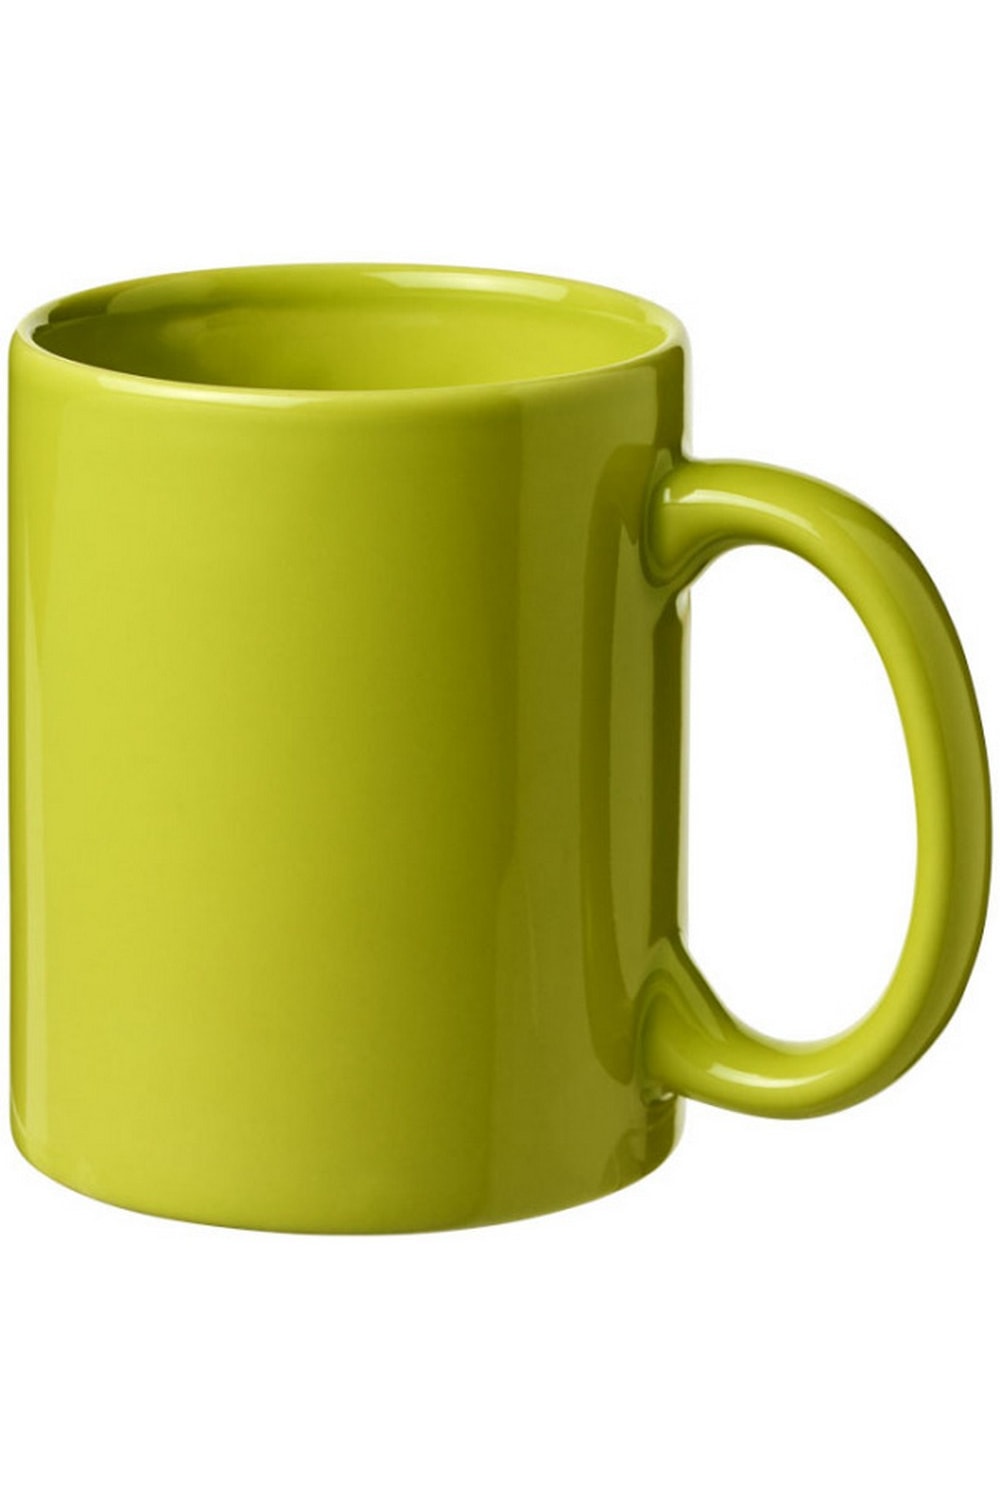 Bullet Santos Ceramic Mug (Lime) (3.8 x 3.2 inches)